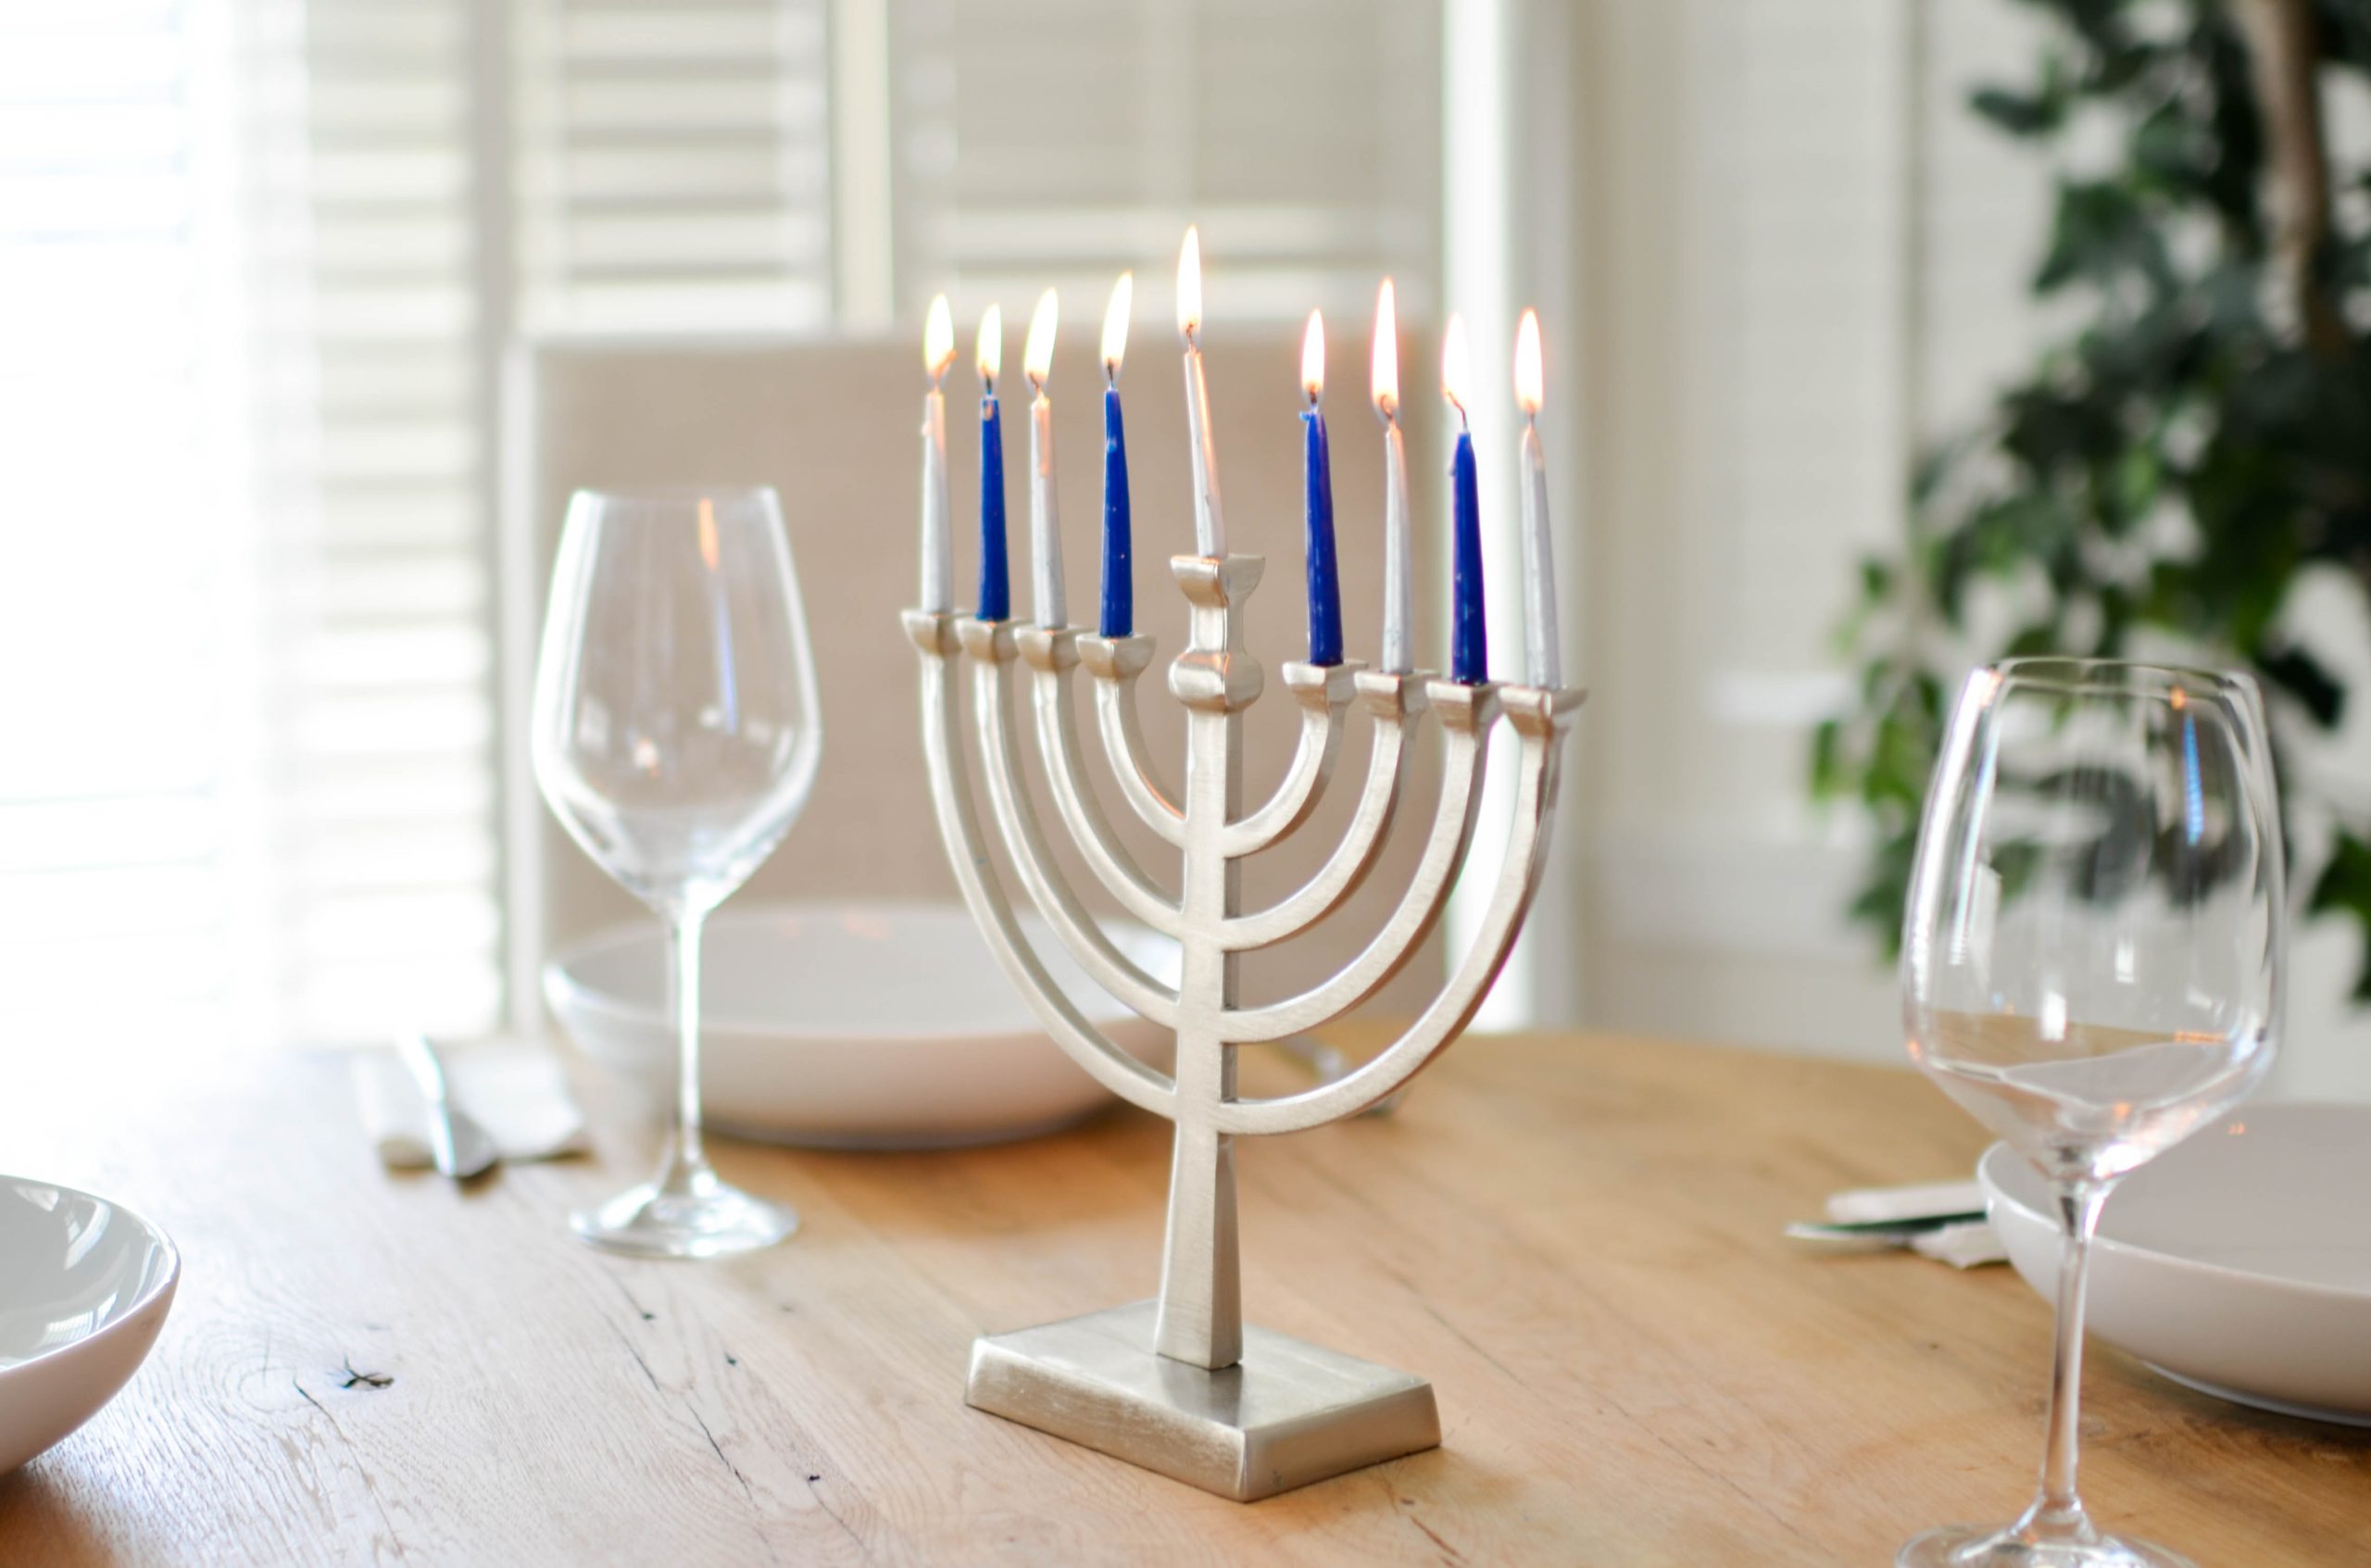 Top 10 Hanukkah Gift Ideas for 2020